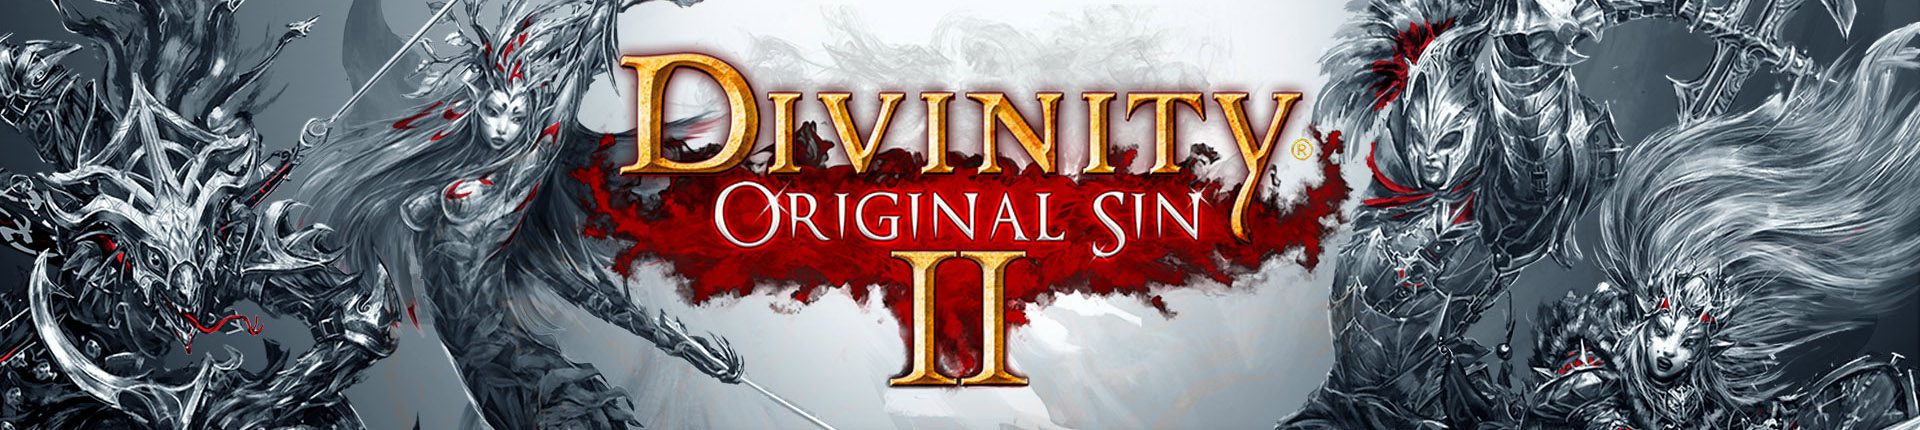 divinity original sin 2 xbox